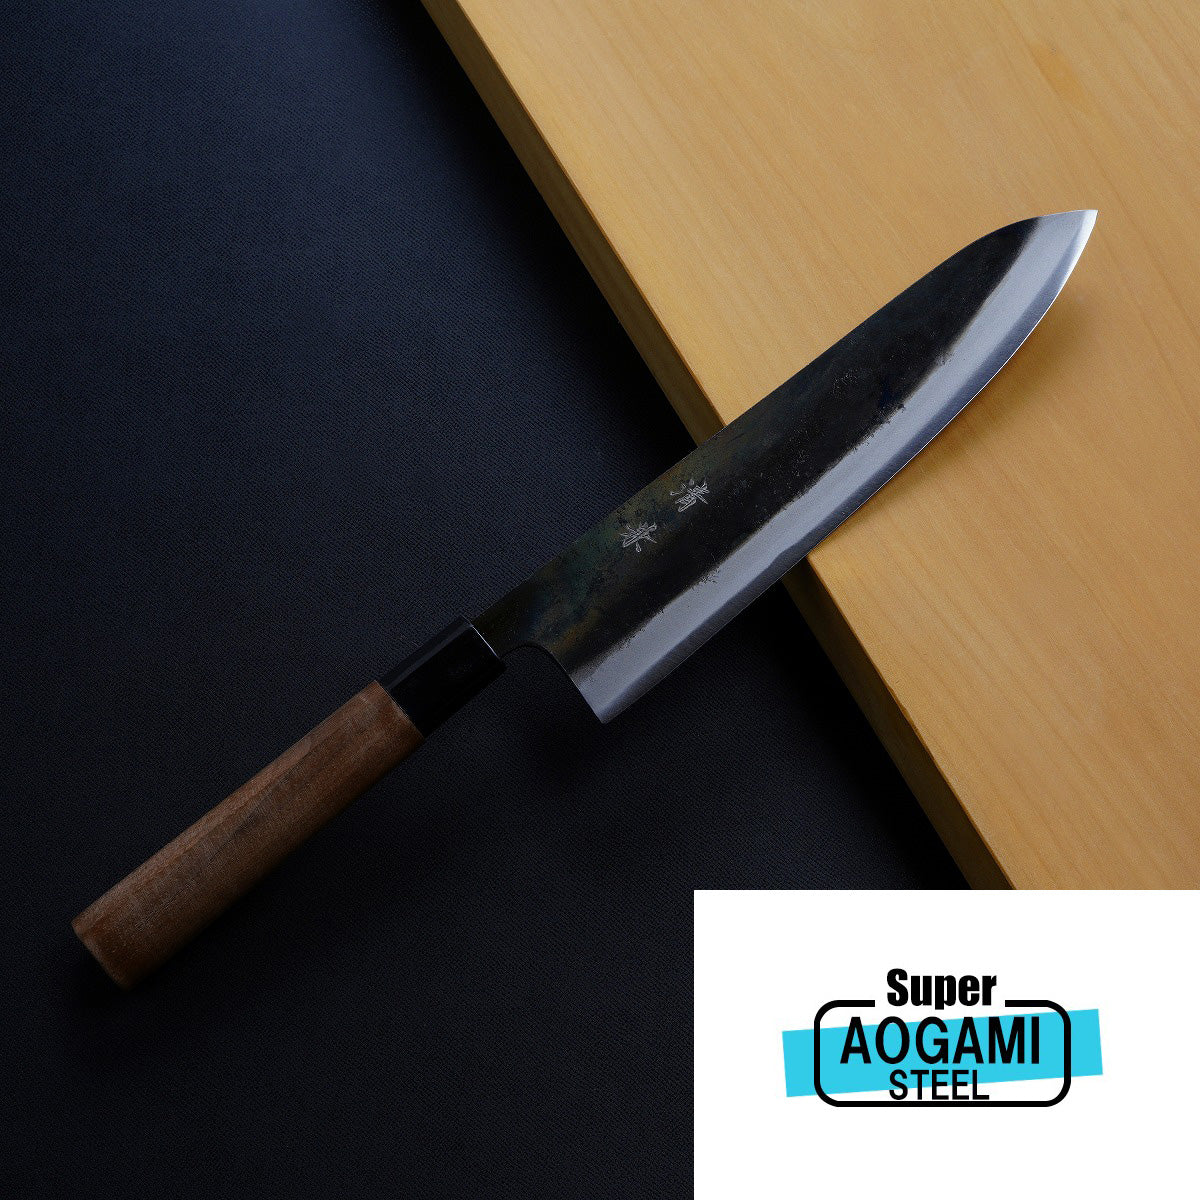 Korean carbon steel knives